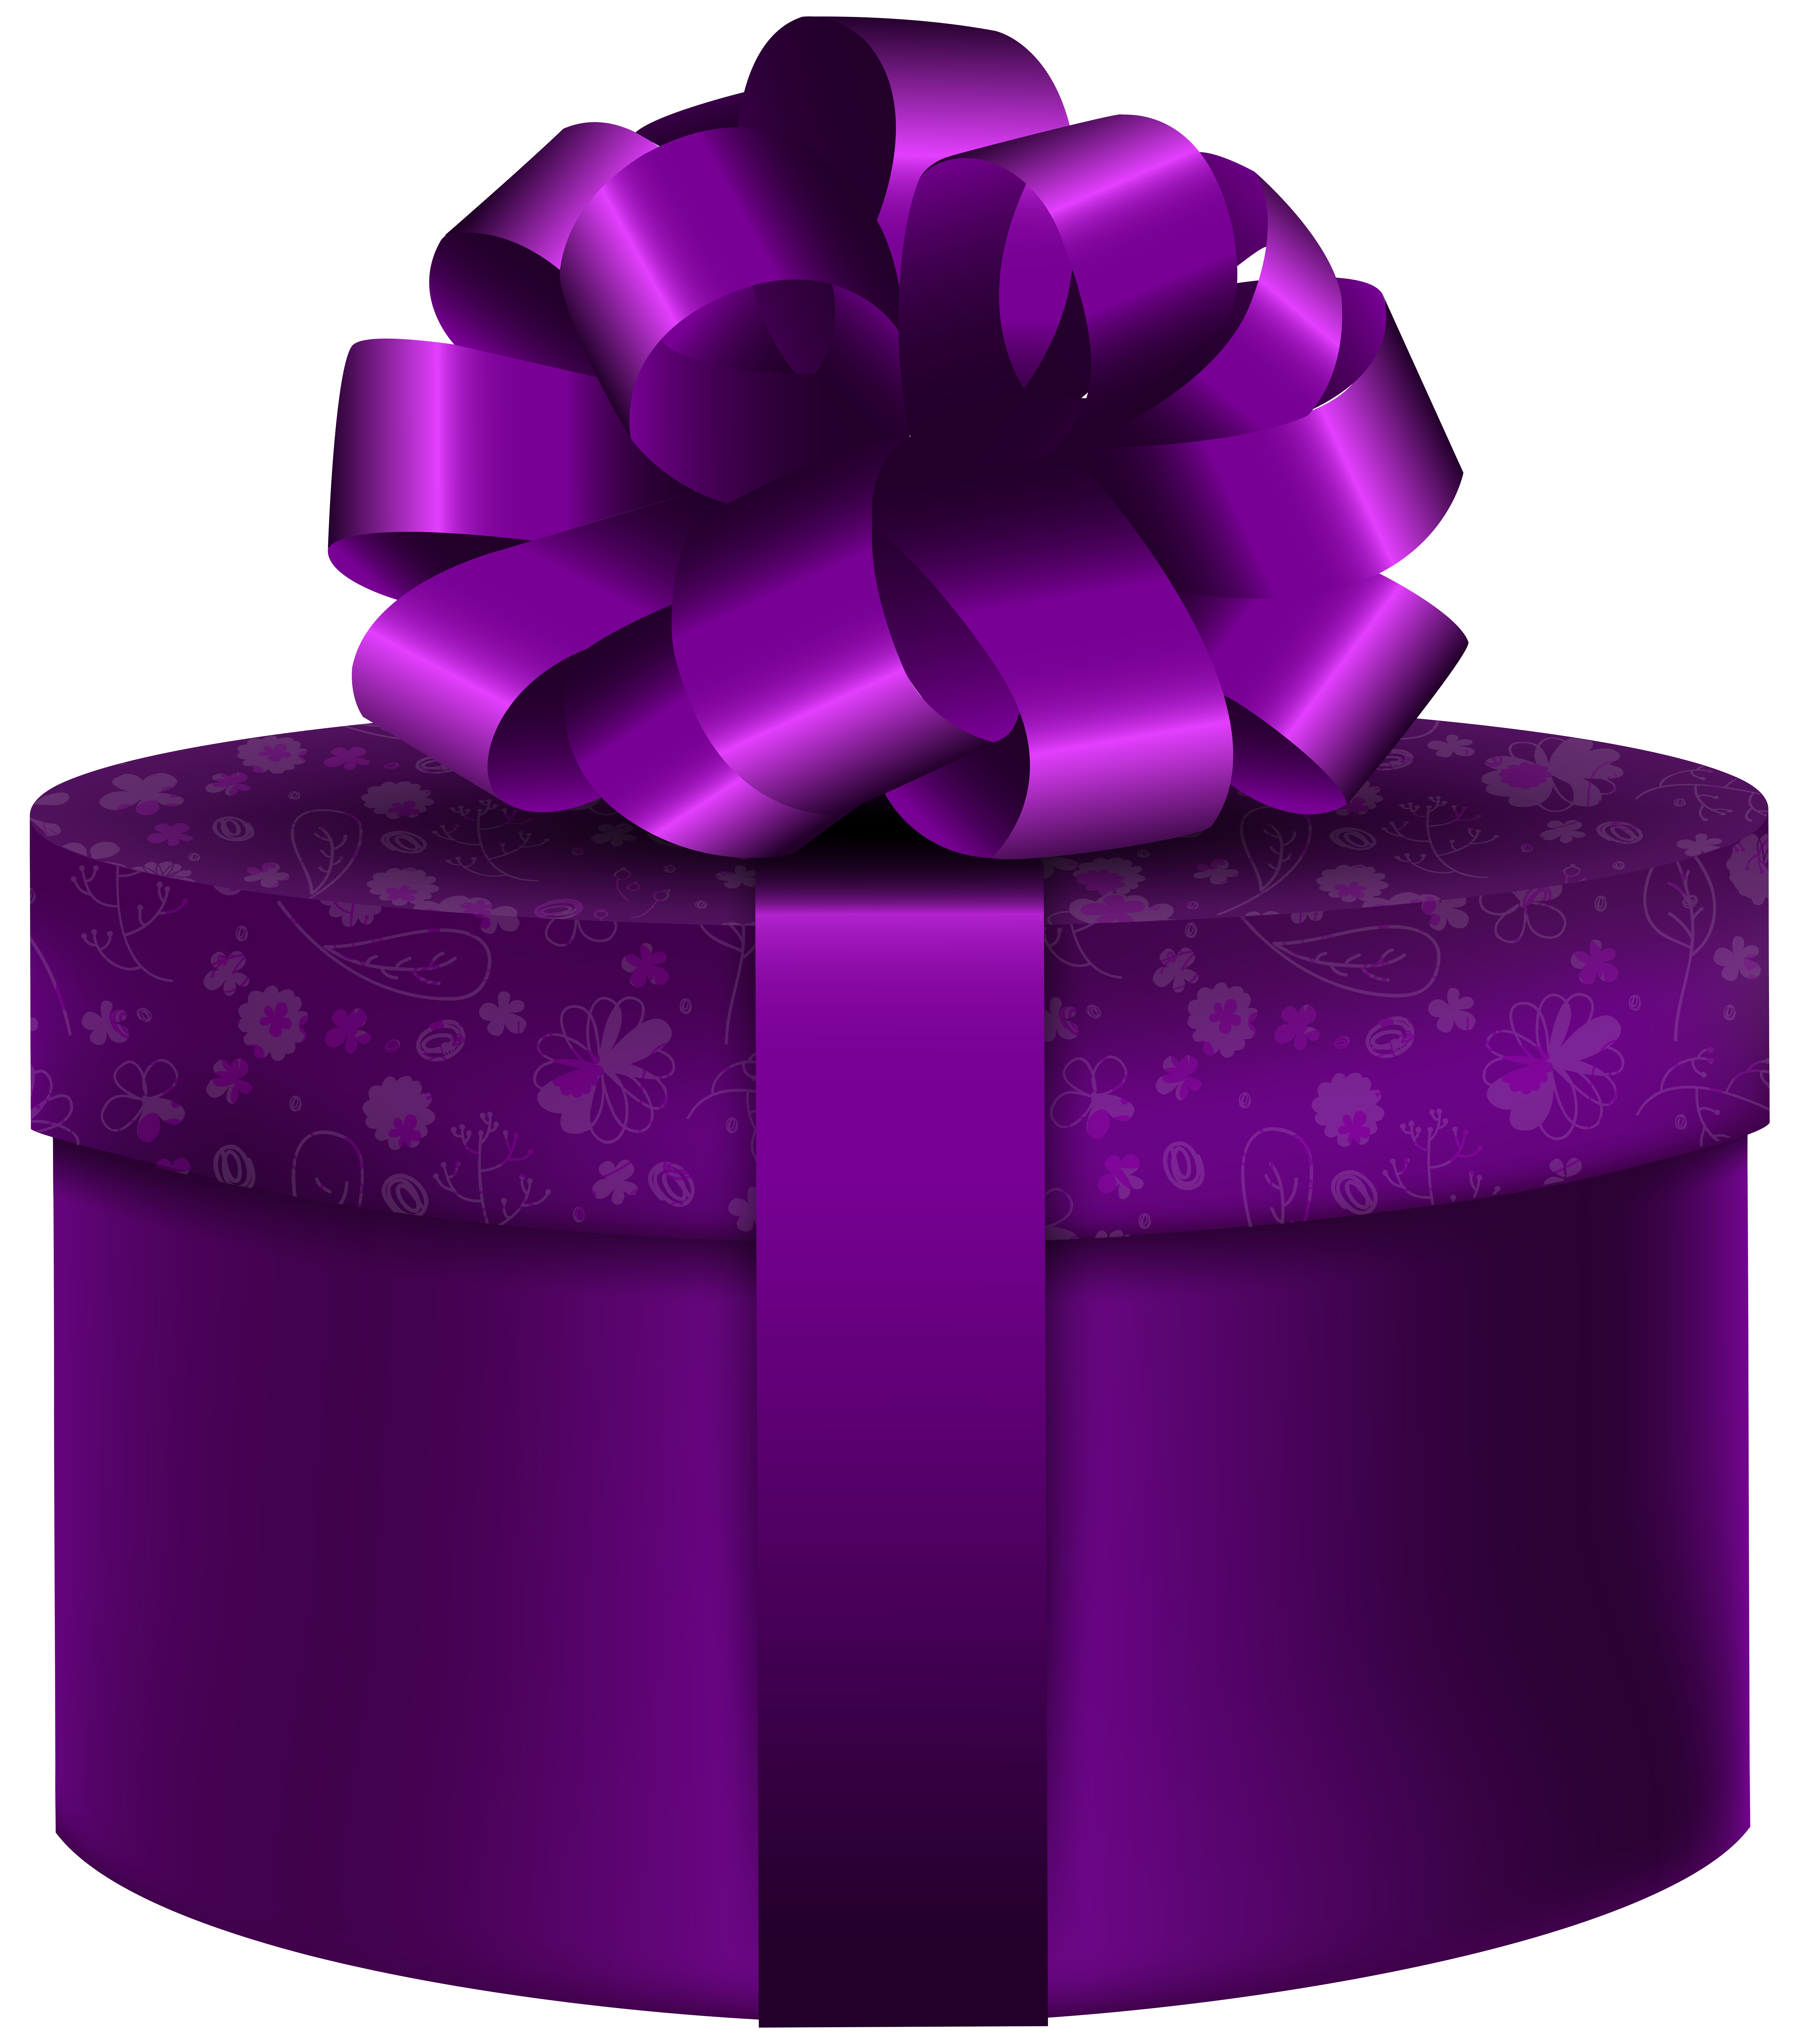 gift clipart purple